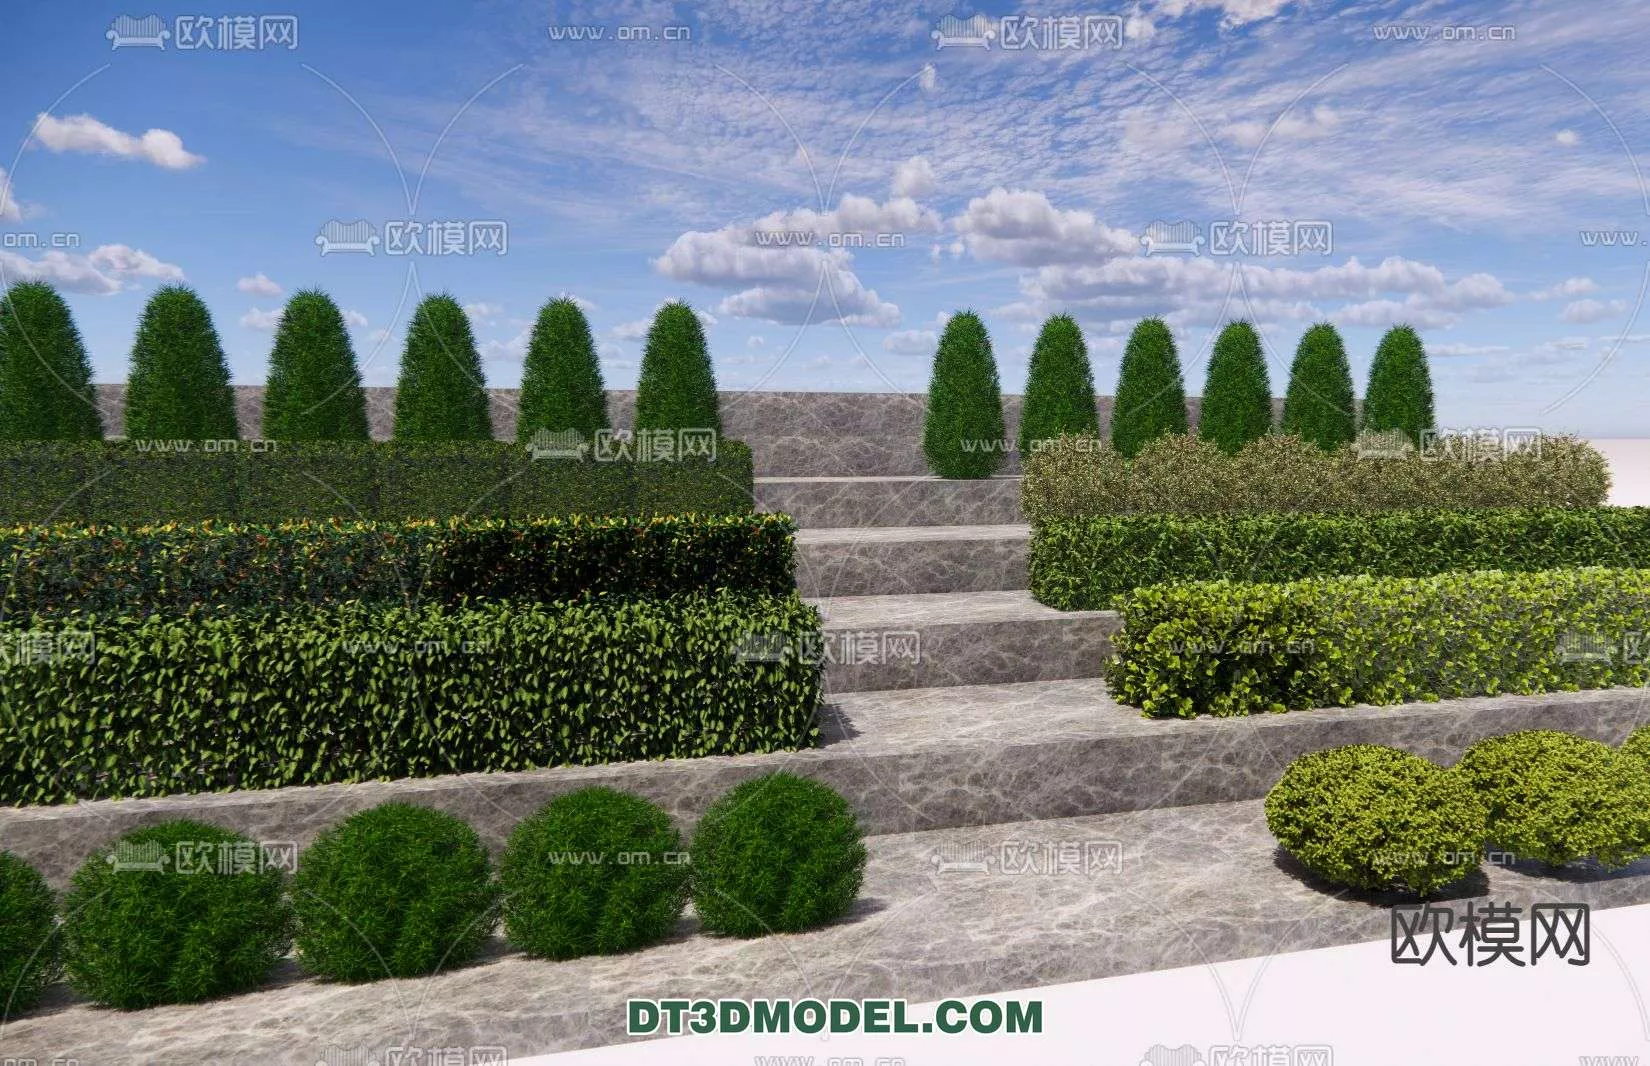 MODERN UNDERSHRUB - SKETCHUP 3D MODEL - VRAY OR ENSCAPE - ID15736